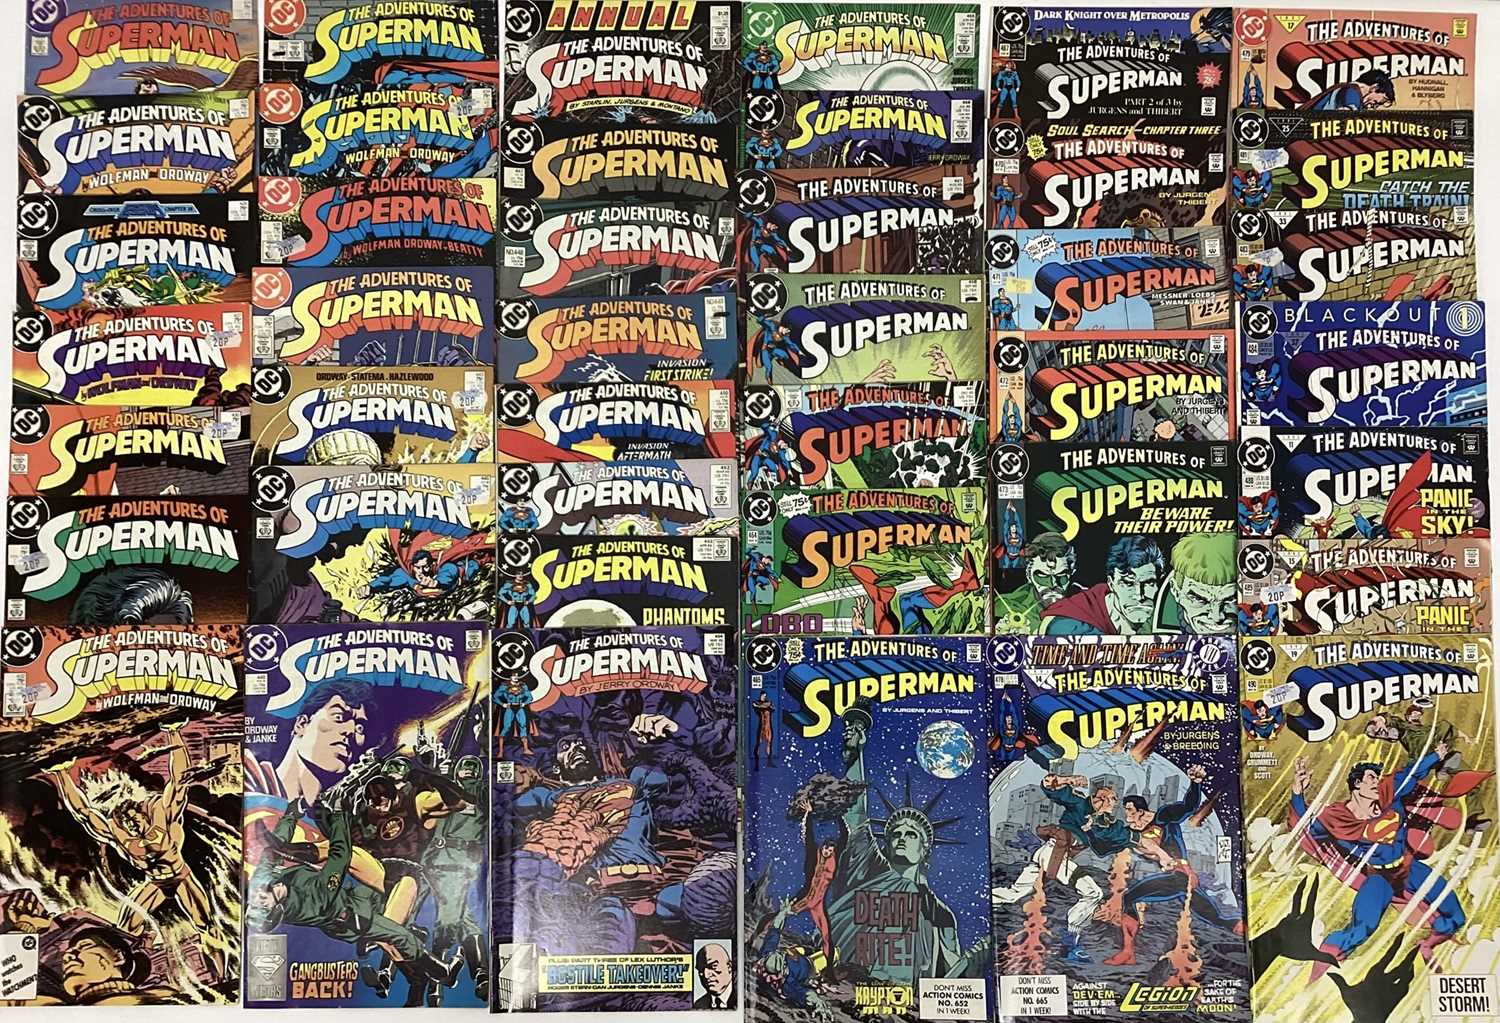 Large quantity of DC Comics, The Adventures of Superman